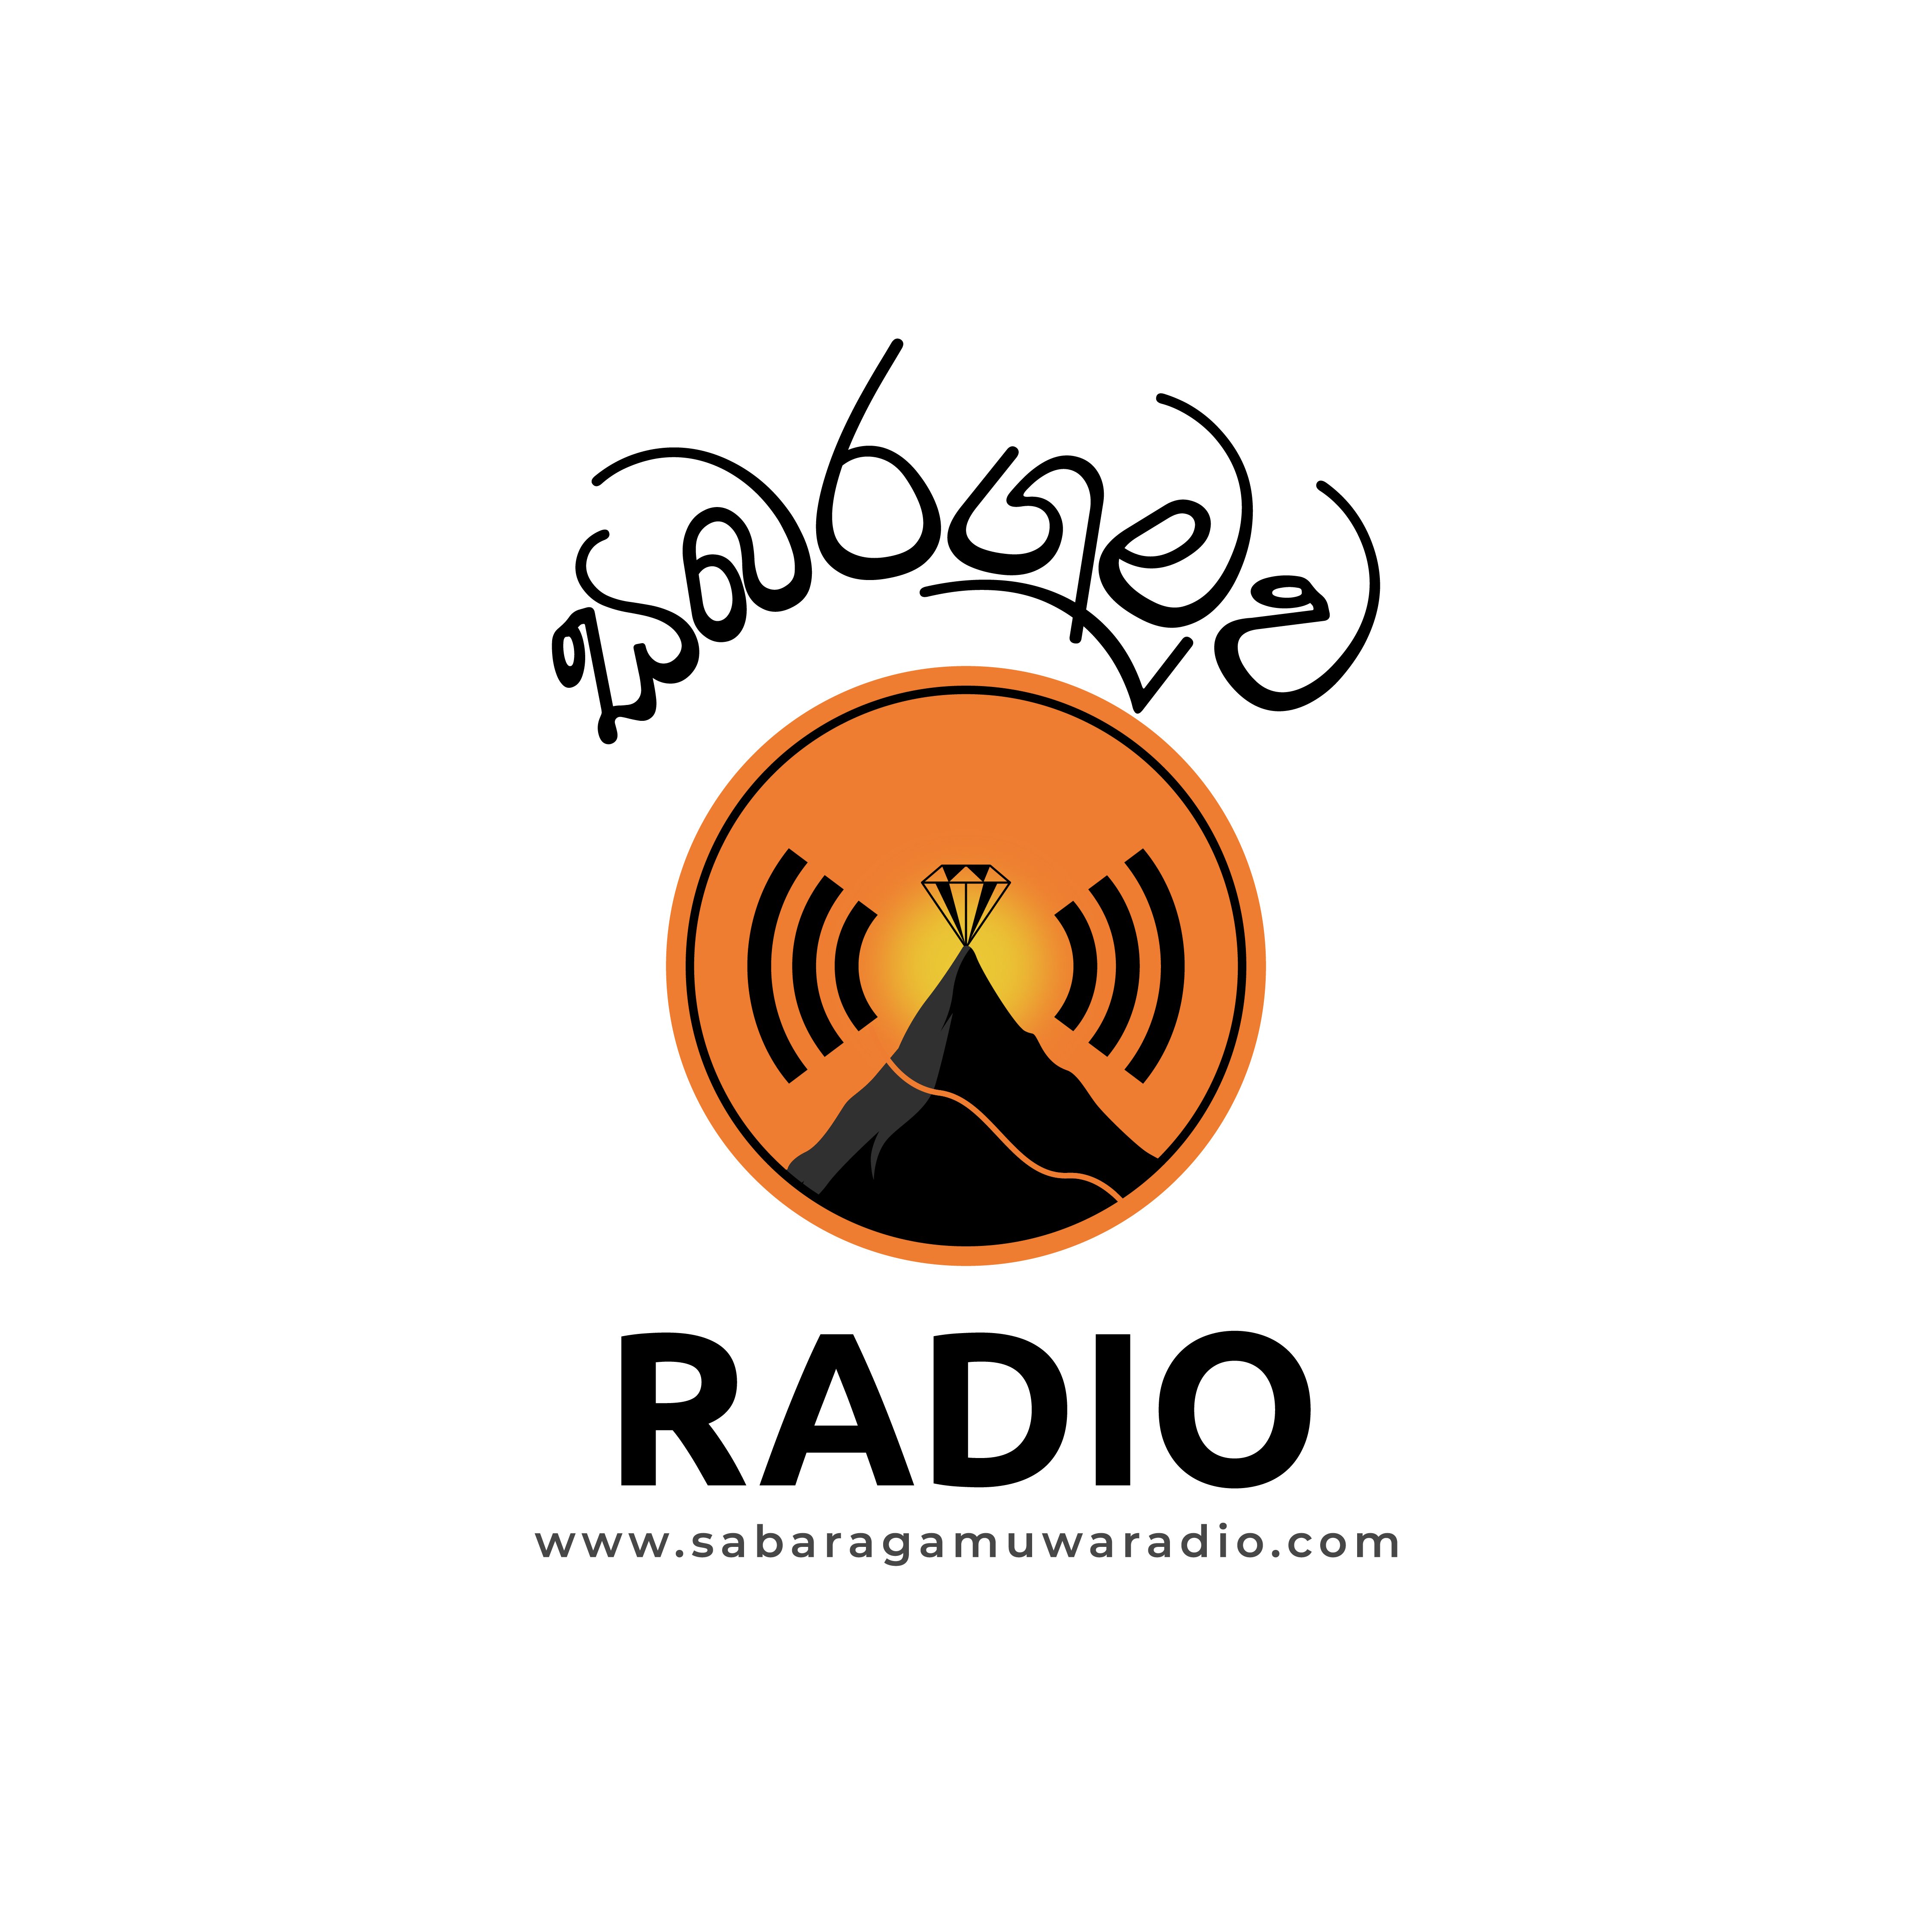 SabaraGamuwa Radio